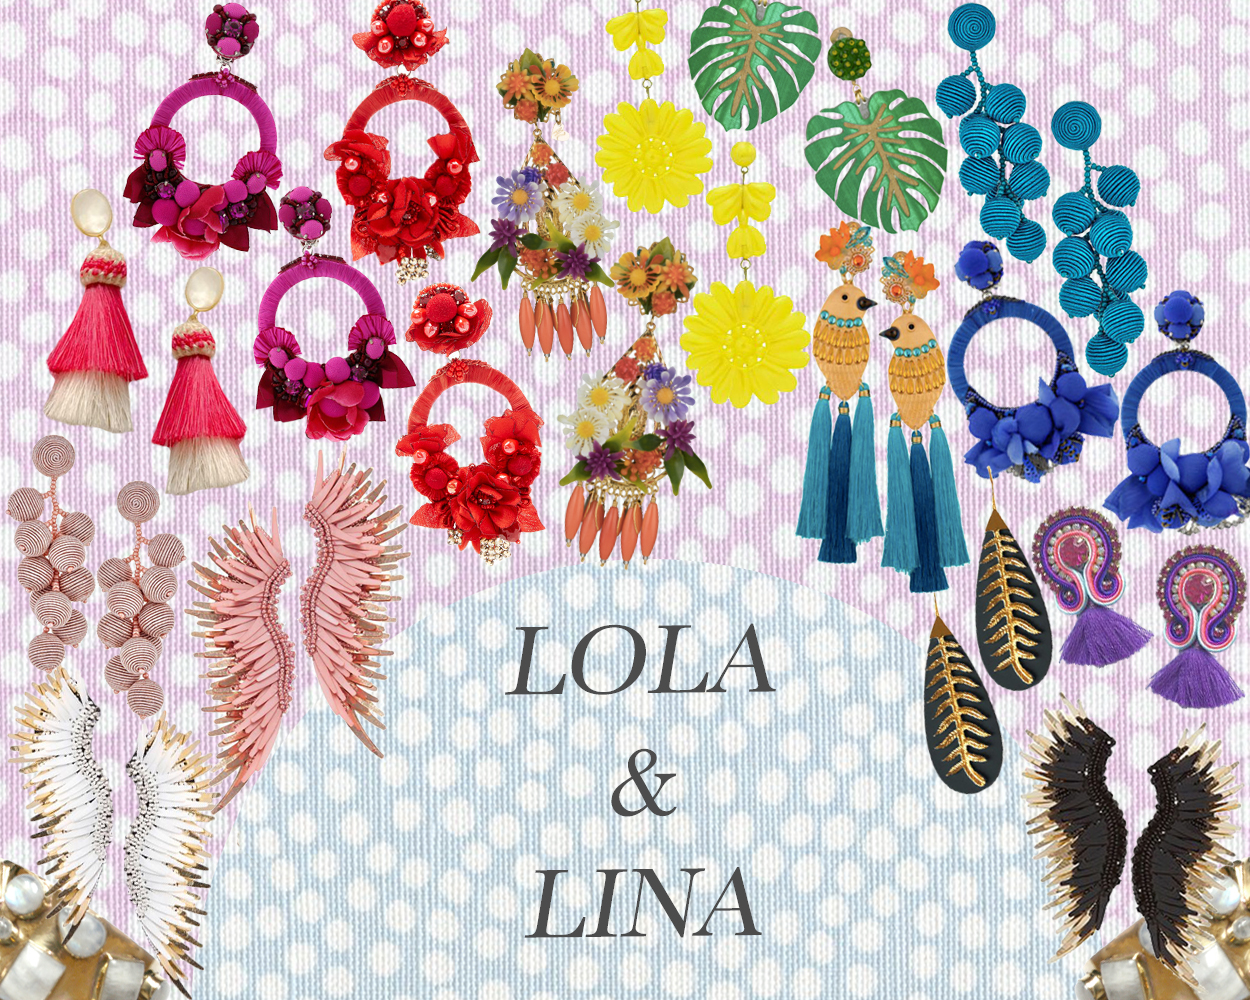 Lola and lina